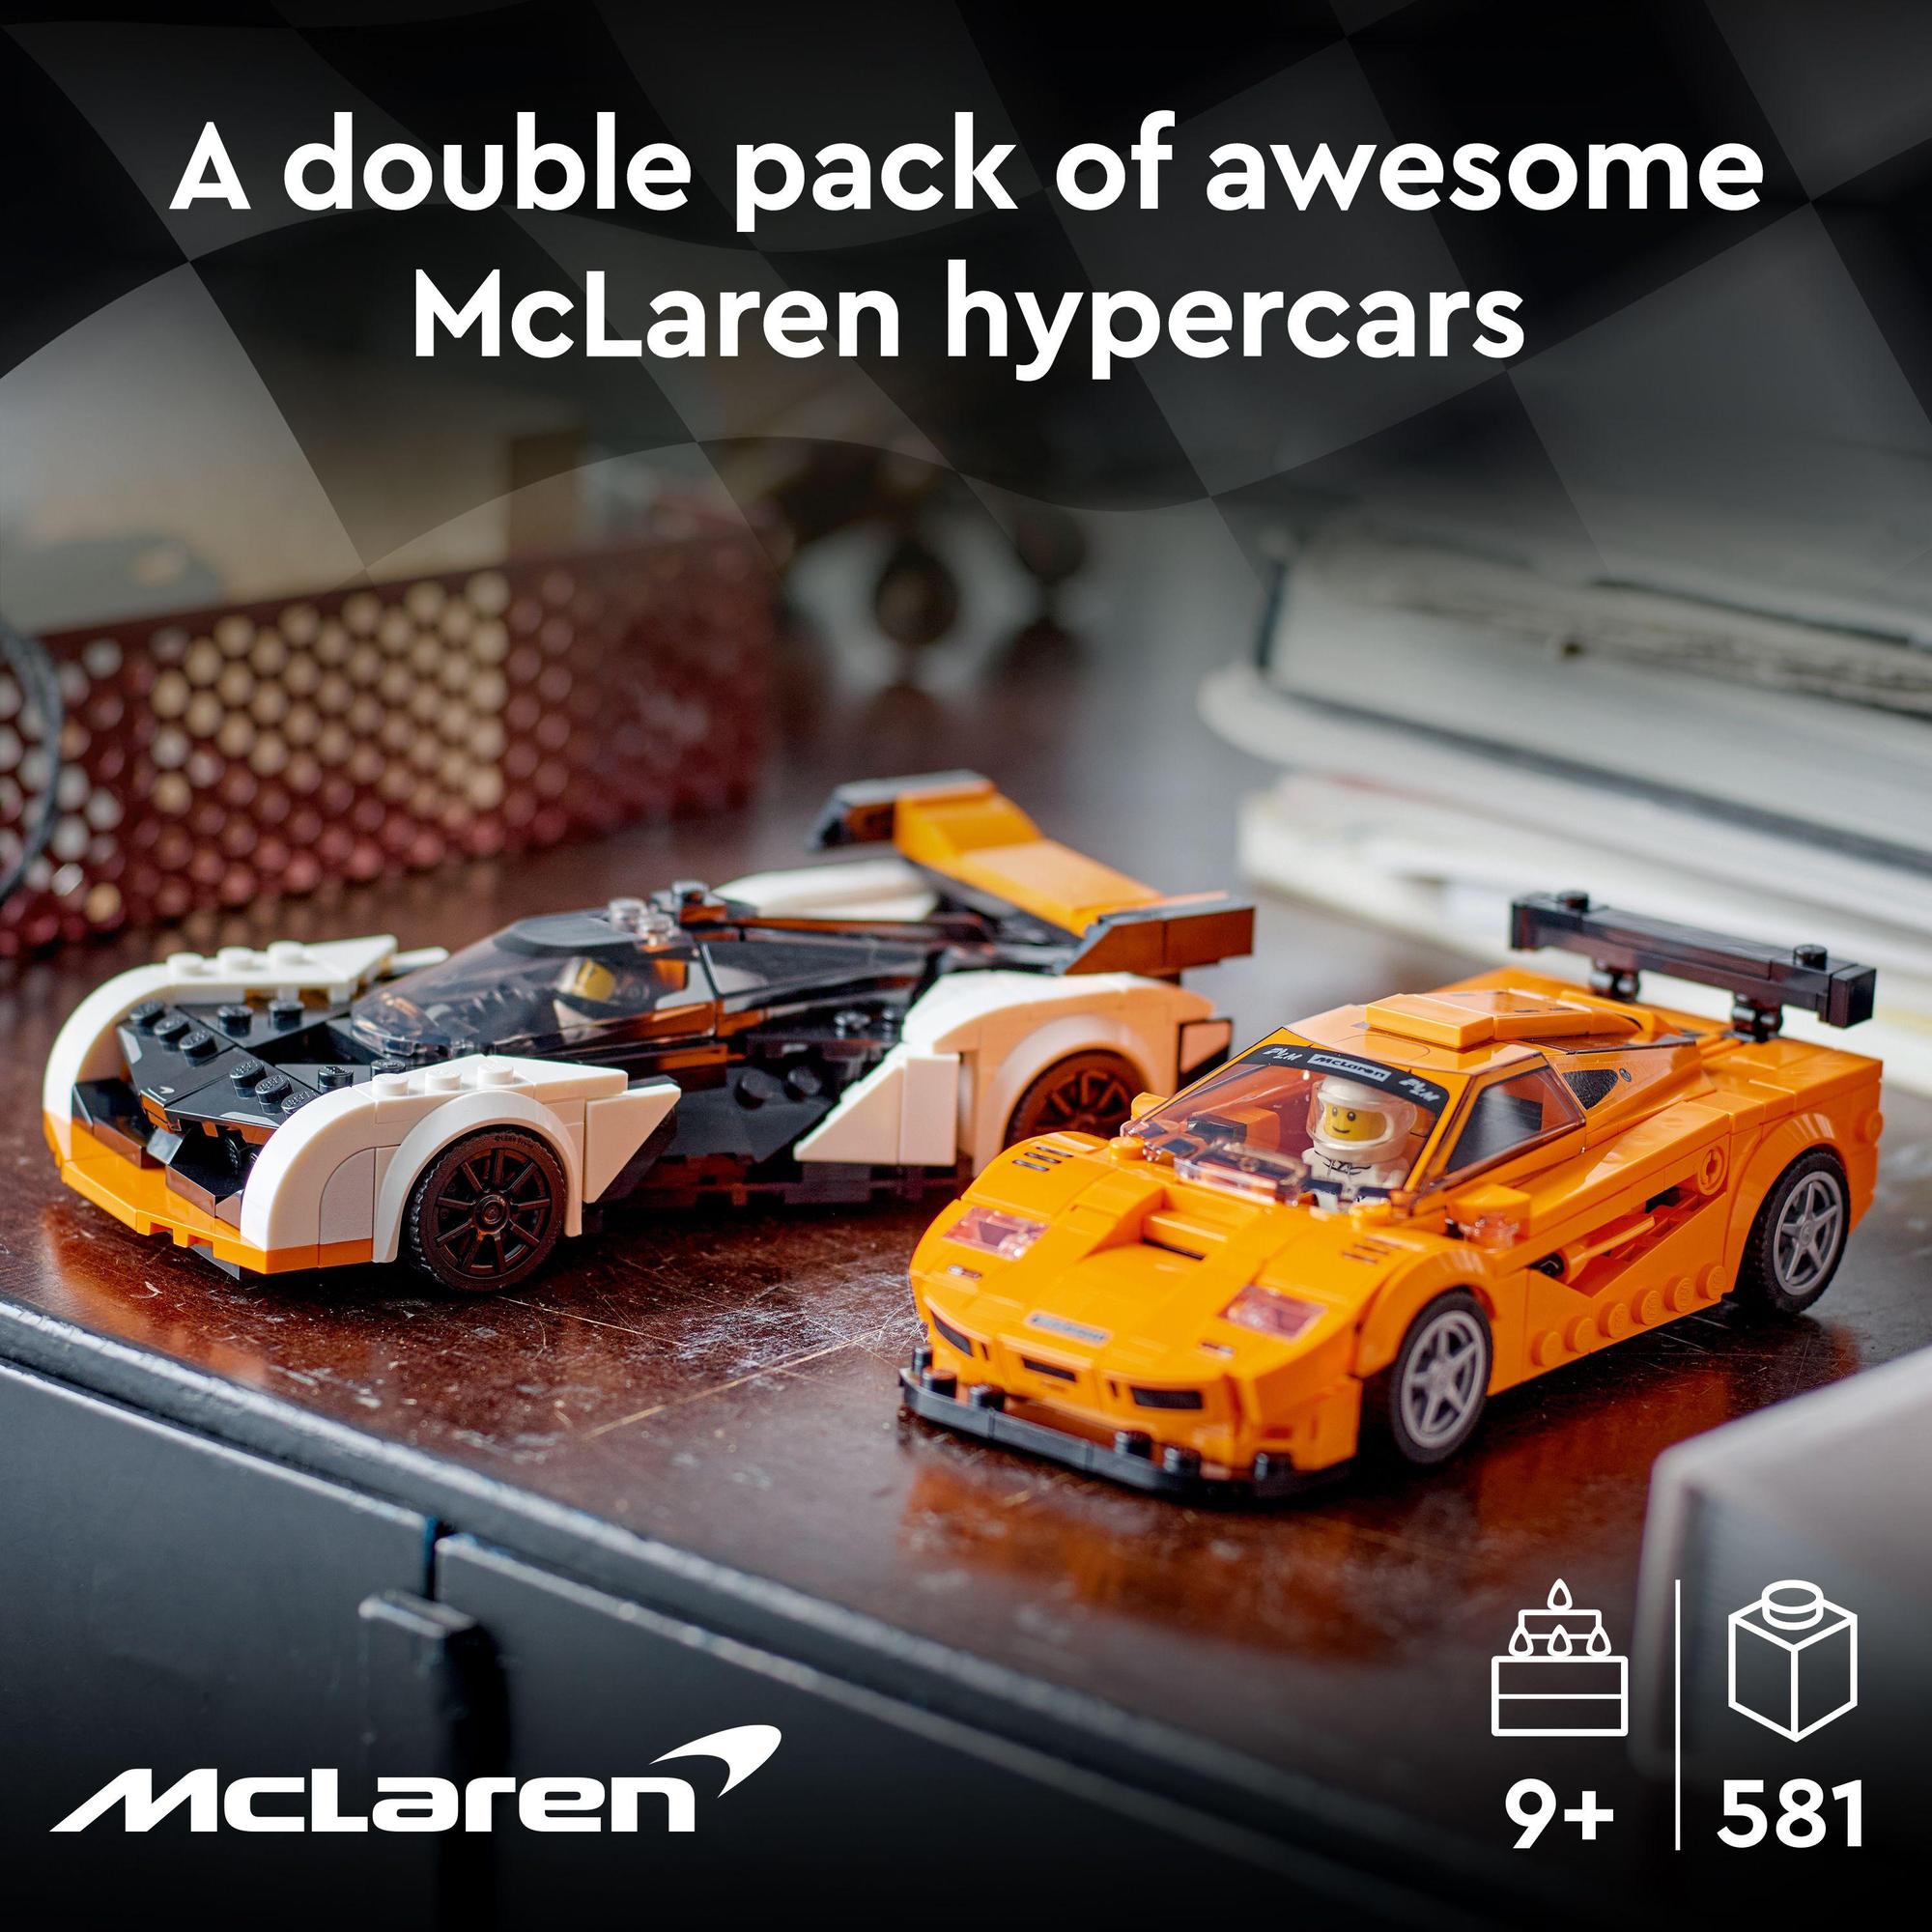 LEGO SPEED CHAMPIONS 76918 Siêu xe McLaren Solus GT & McLaren F1 LM (581 chi tiết)